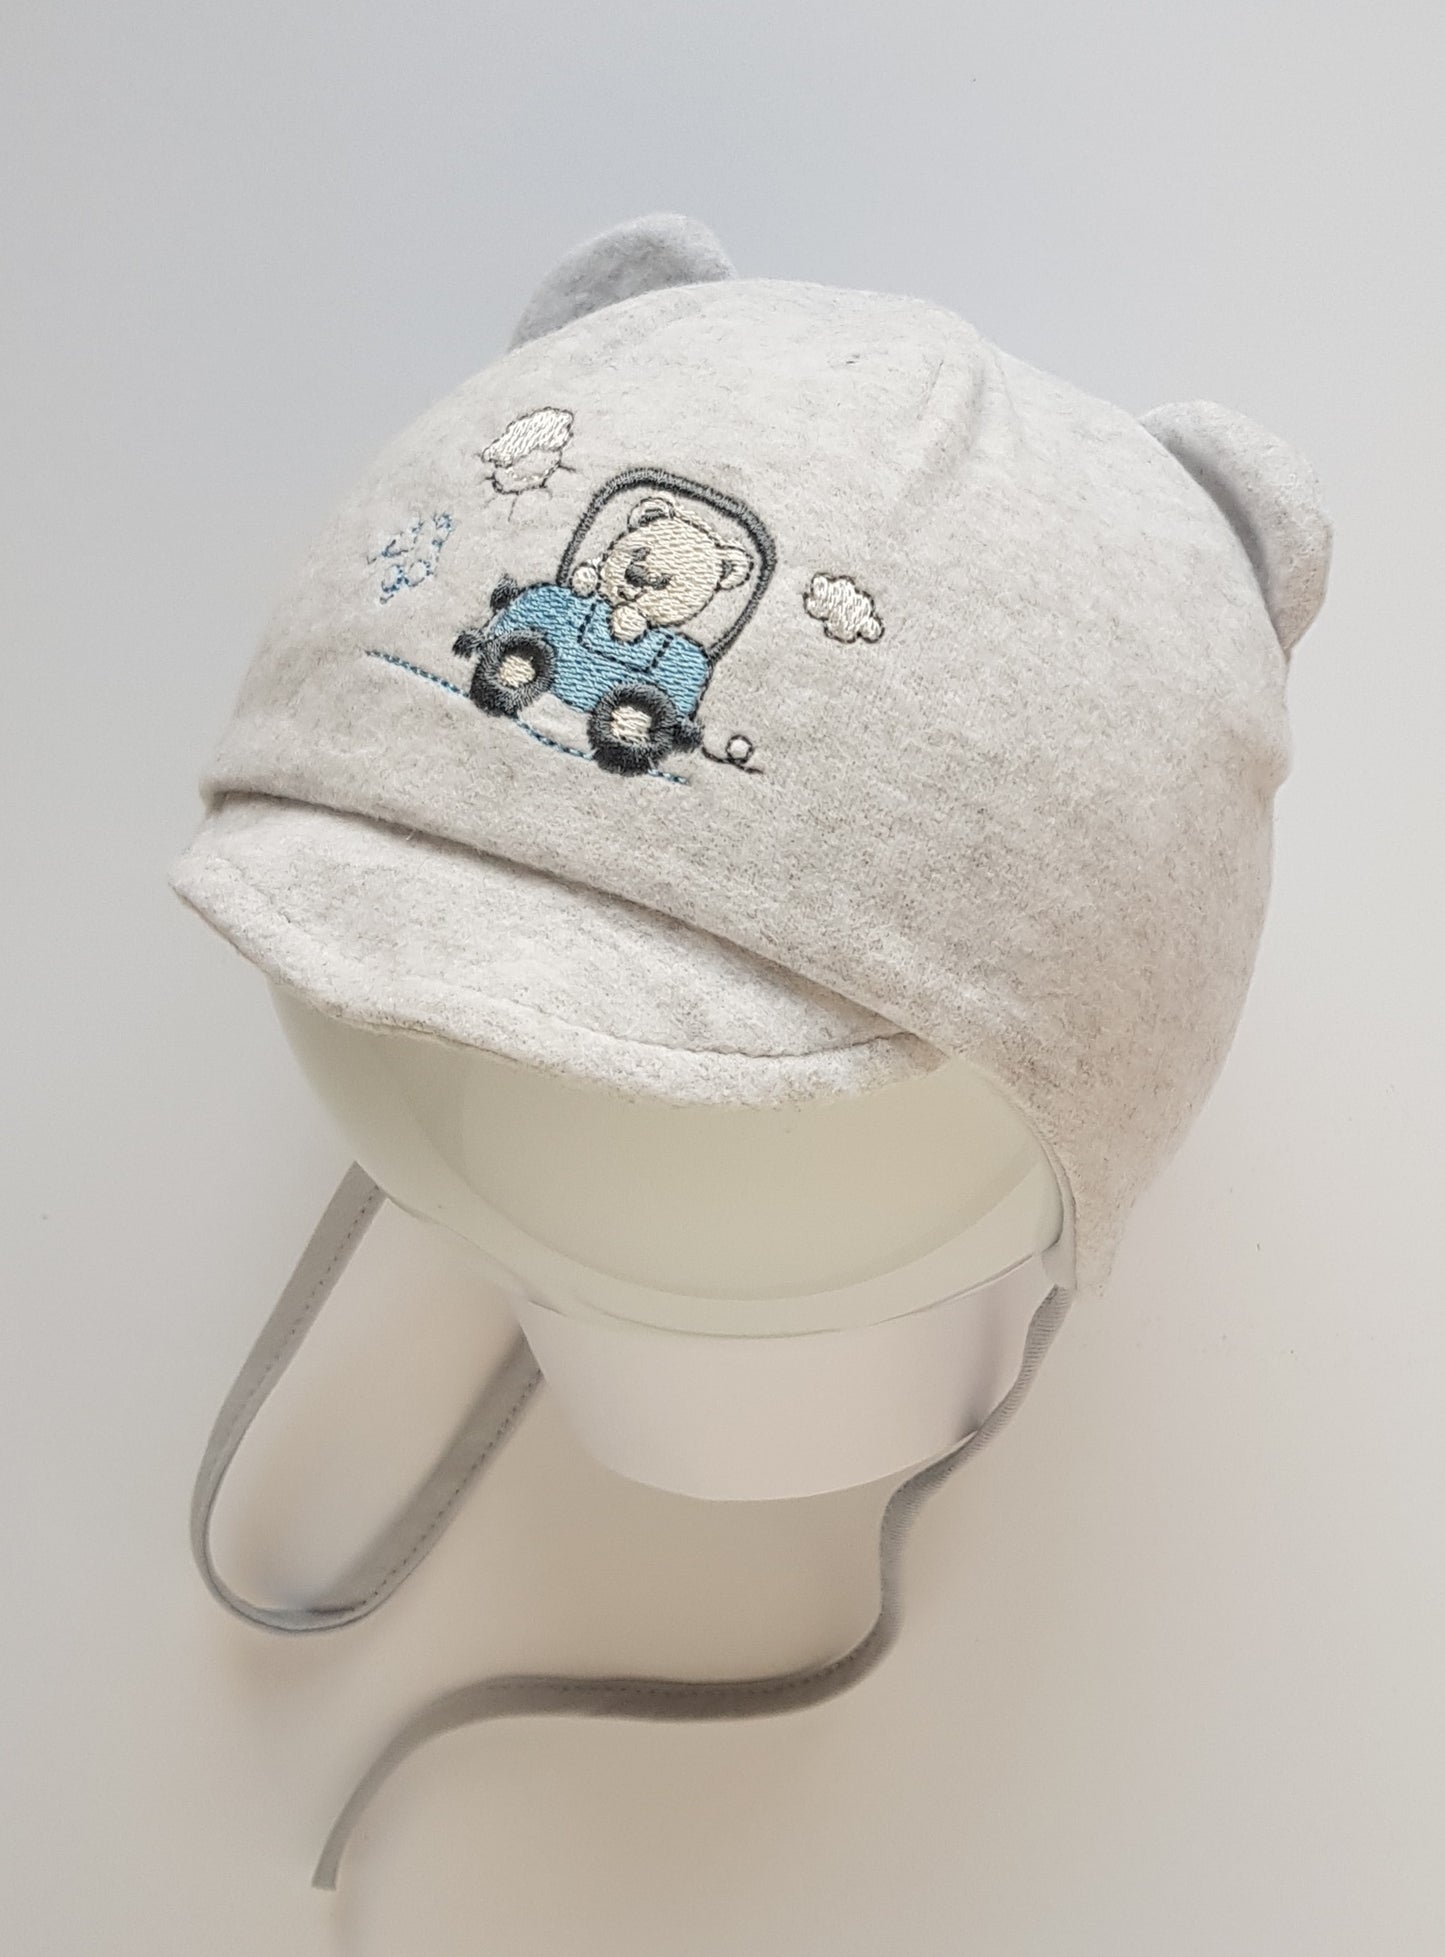 Winter baby boy hat lovinghats babywear clothes for babies warm cap 